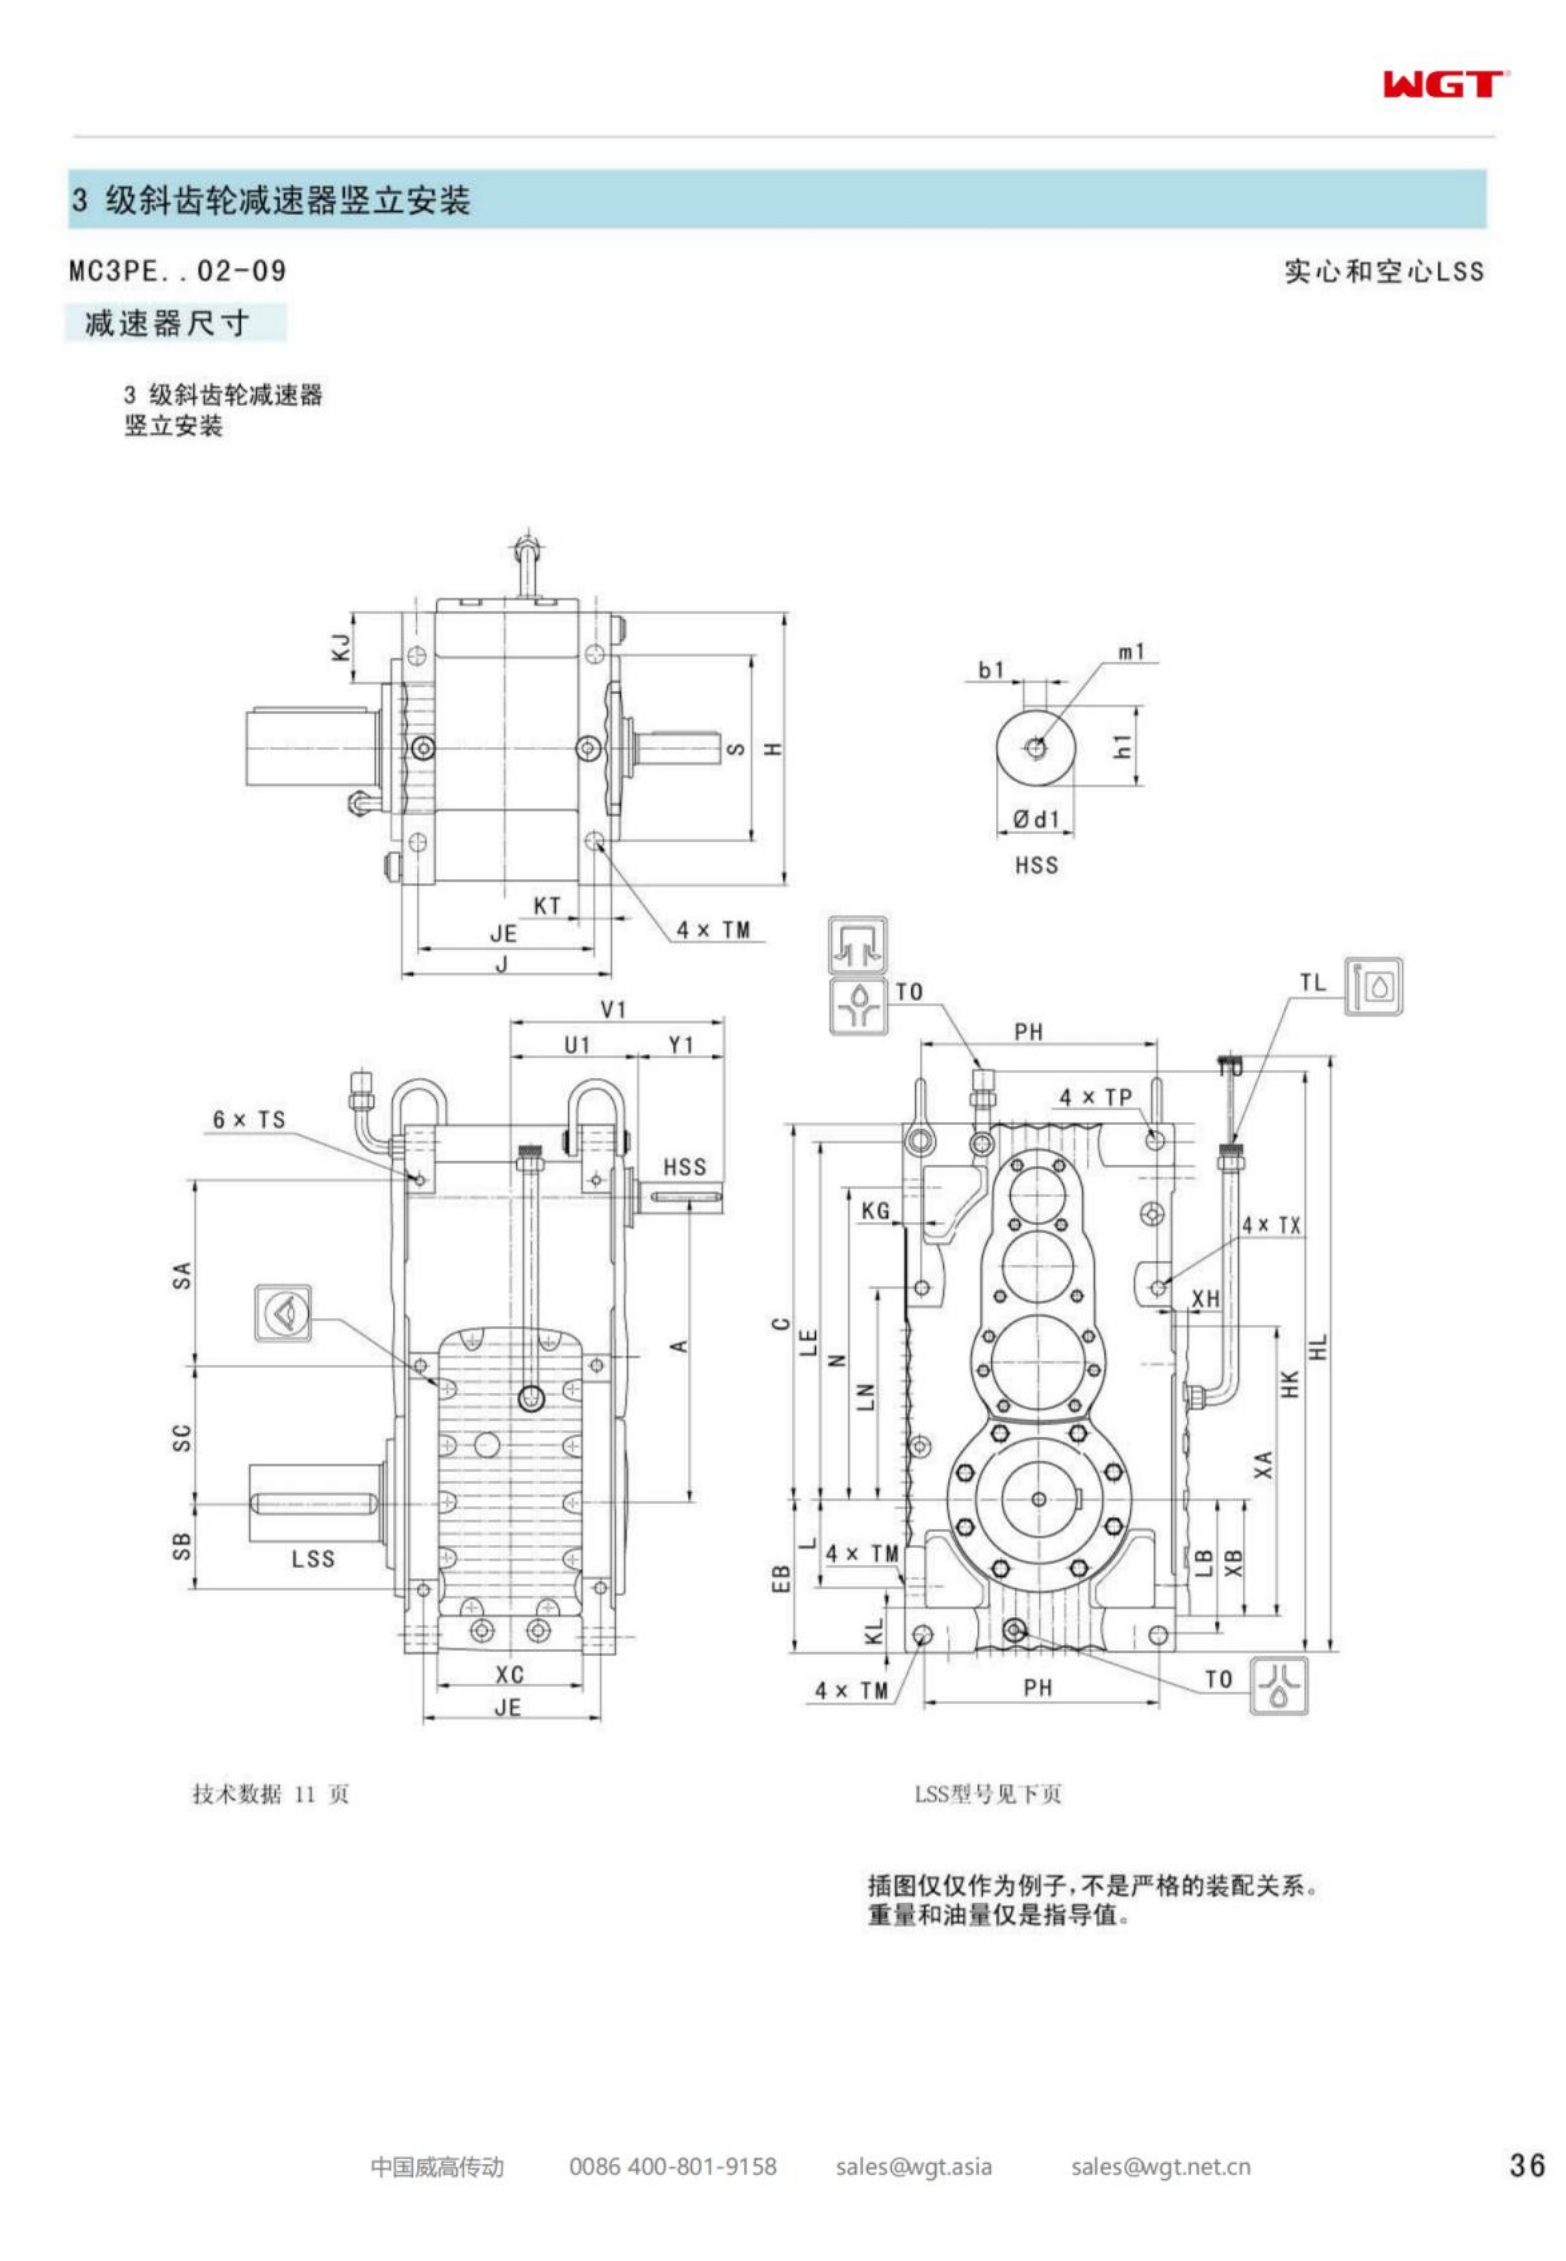 MC3PESF03 replaces _SEW_MC_Series gearbox (patent)